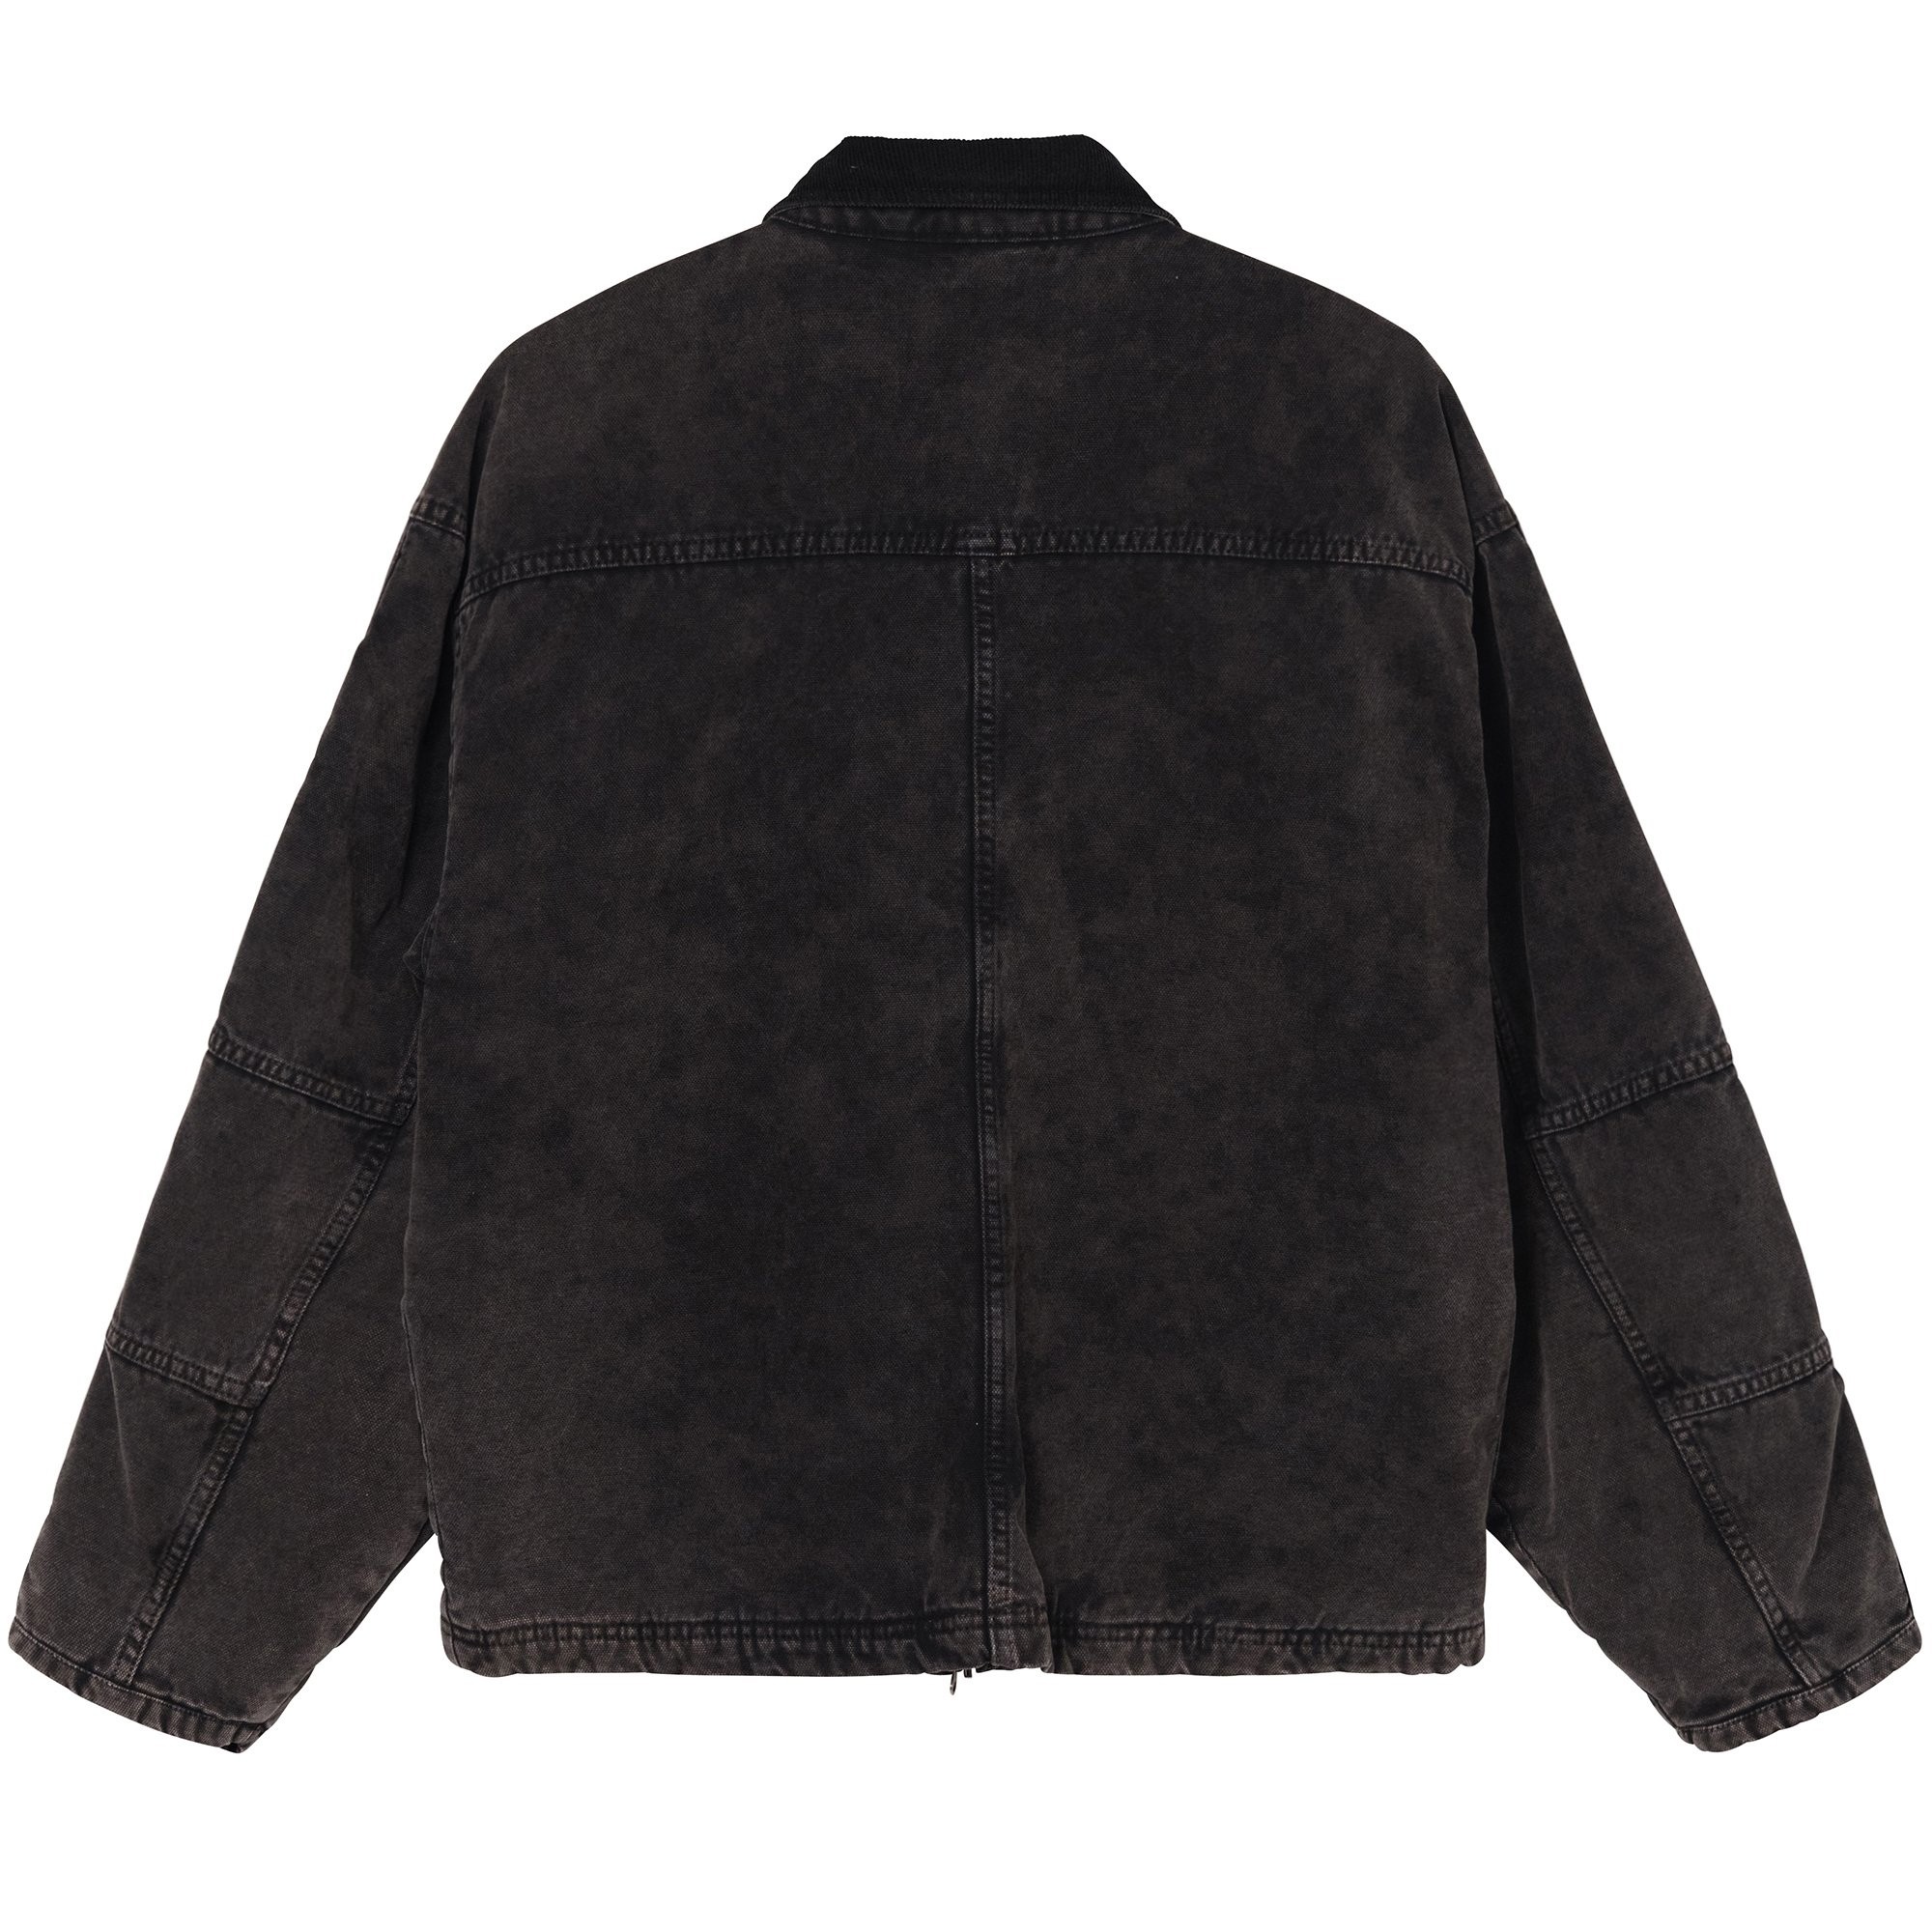 Stussy Washed Canvas Shop Jacket (Black) - 115589-BLK - Consortium